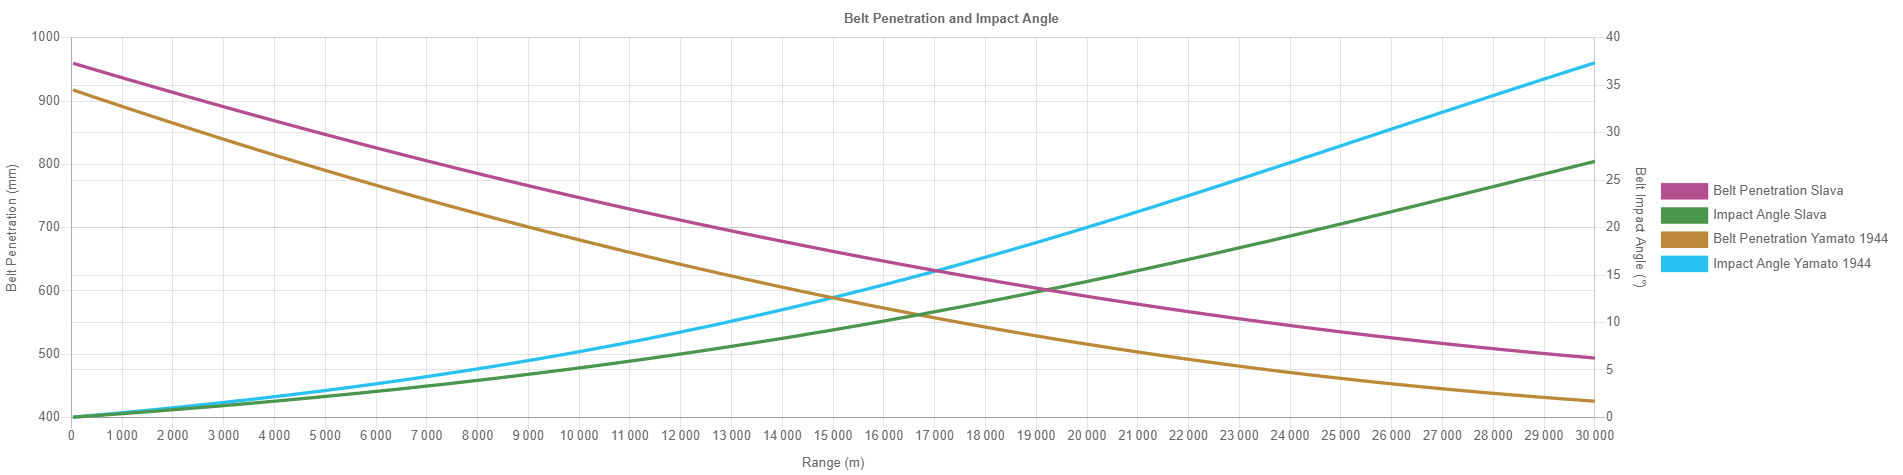 Belt Penetration and Impact Angle